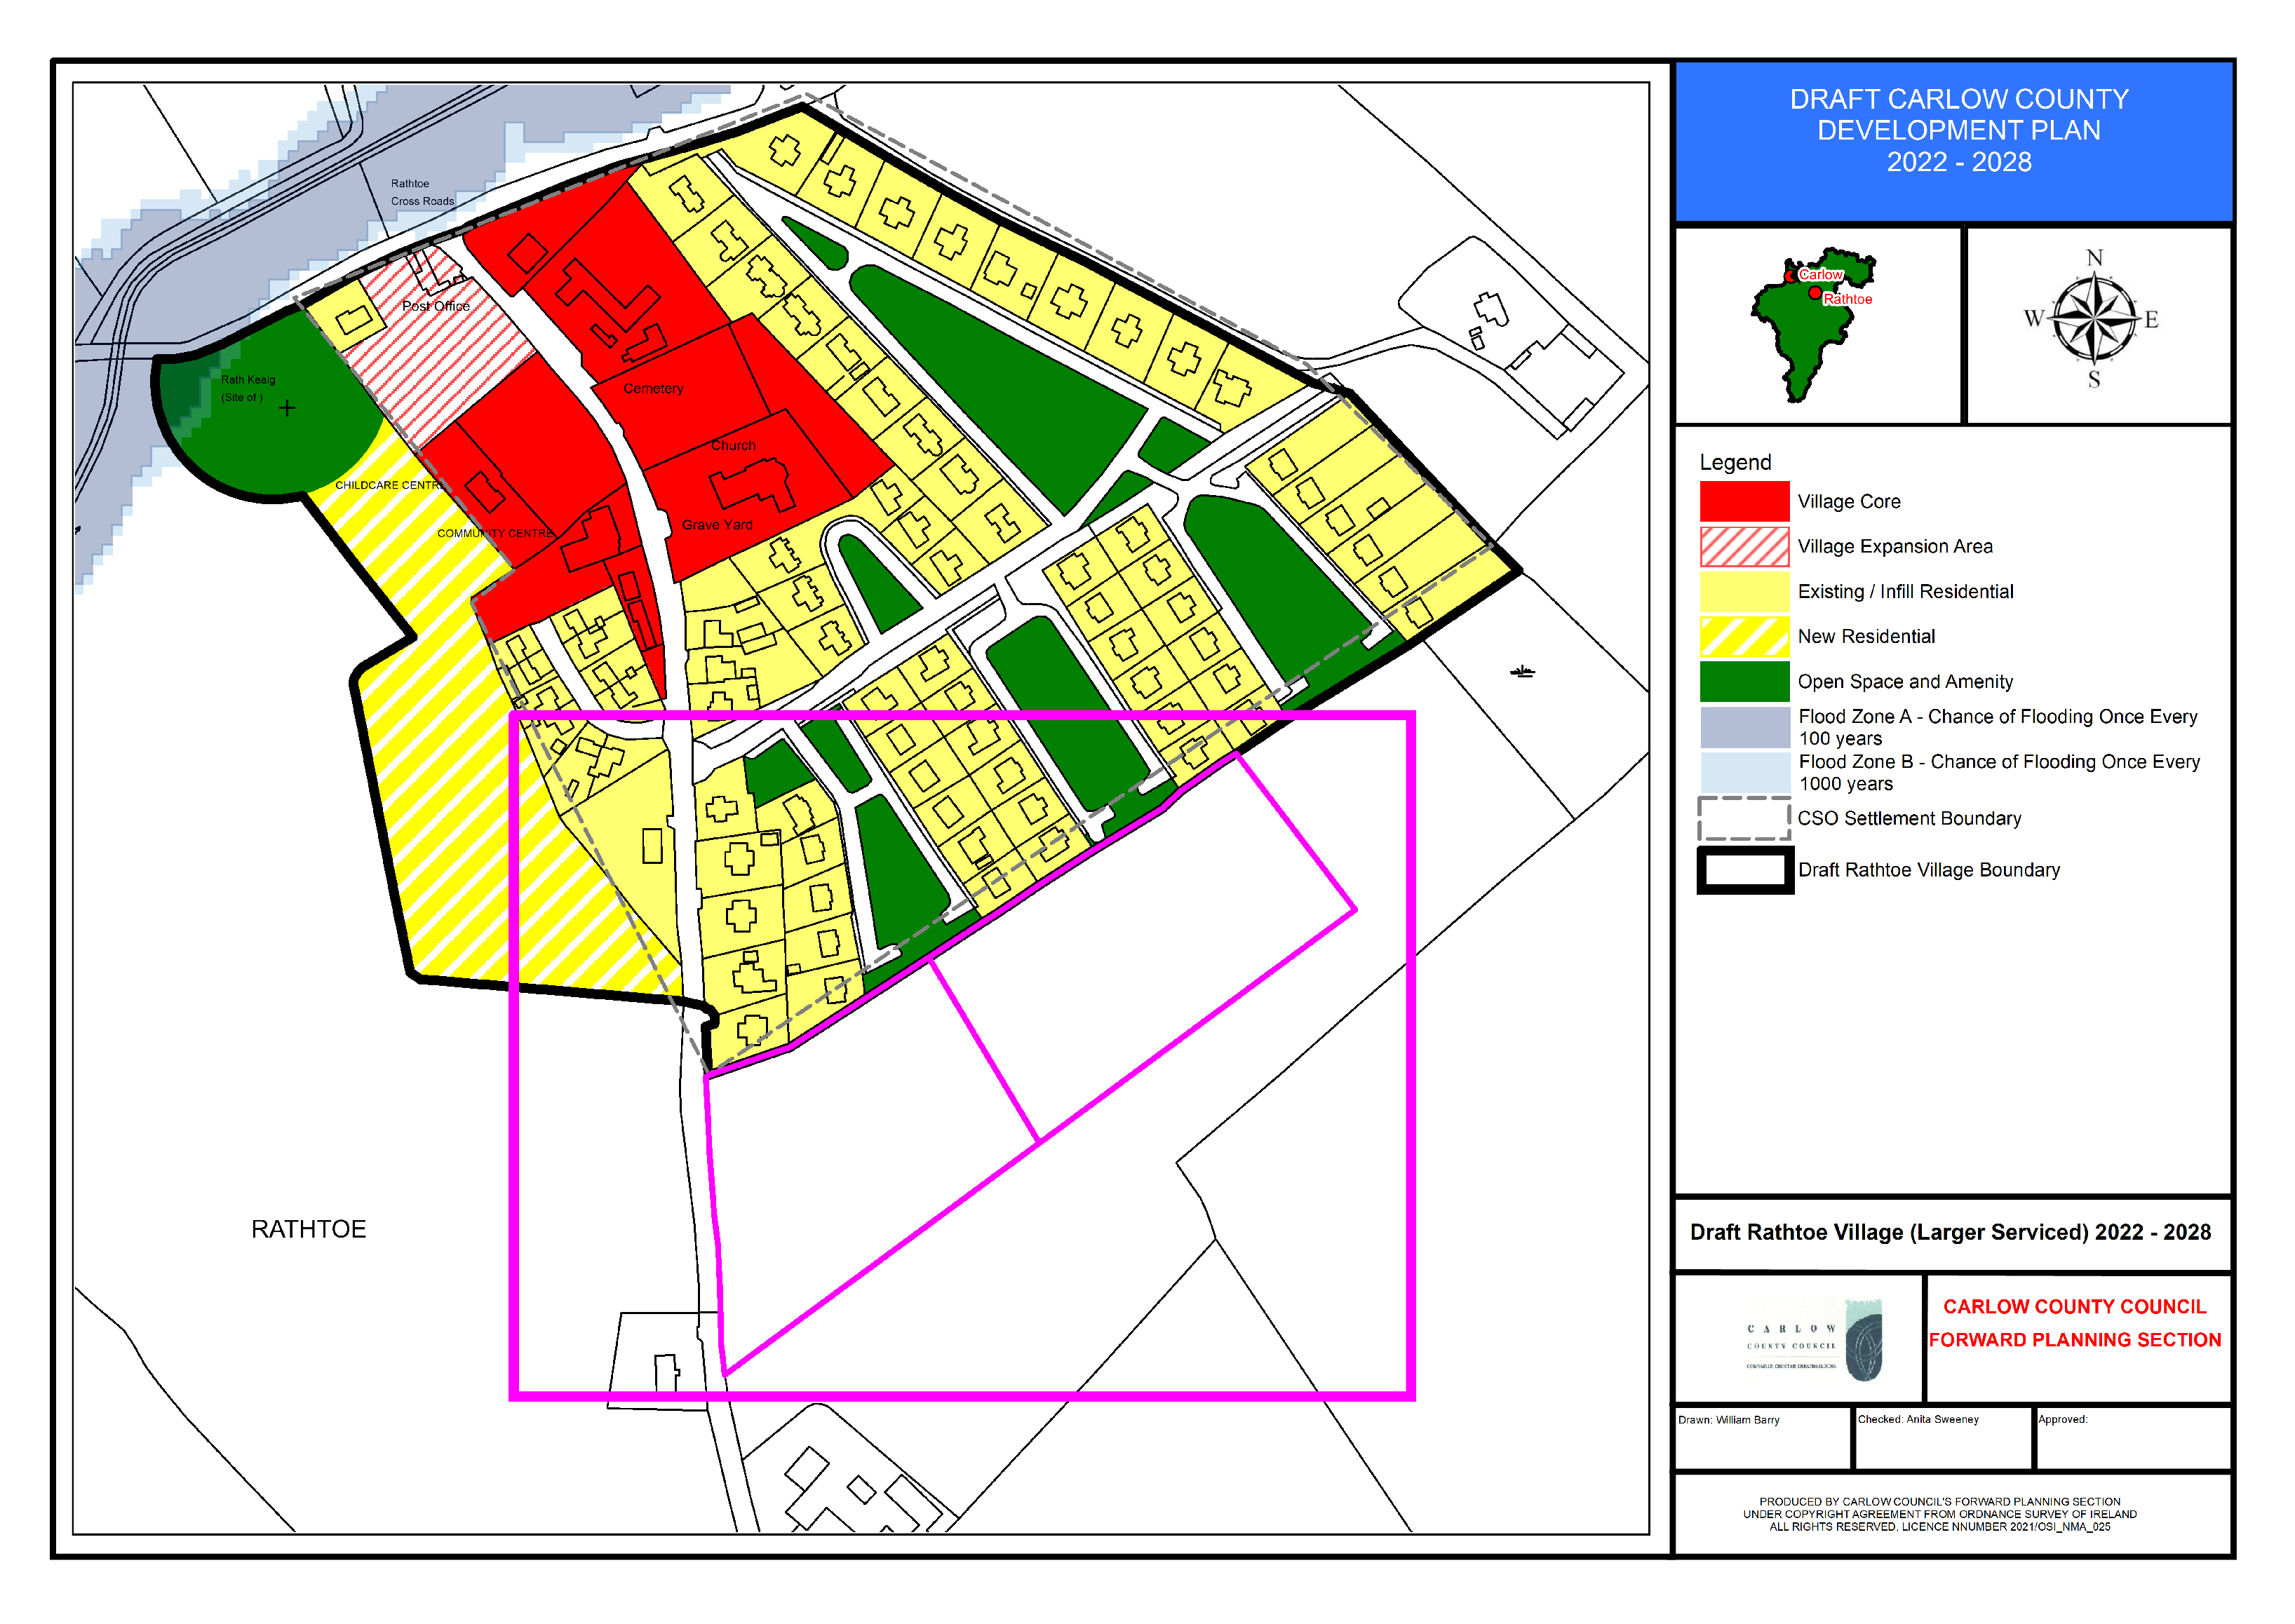 Draft Rathtoe Village (Larger SErviced) 2022-2028